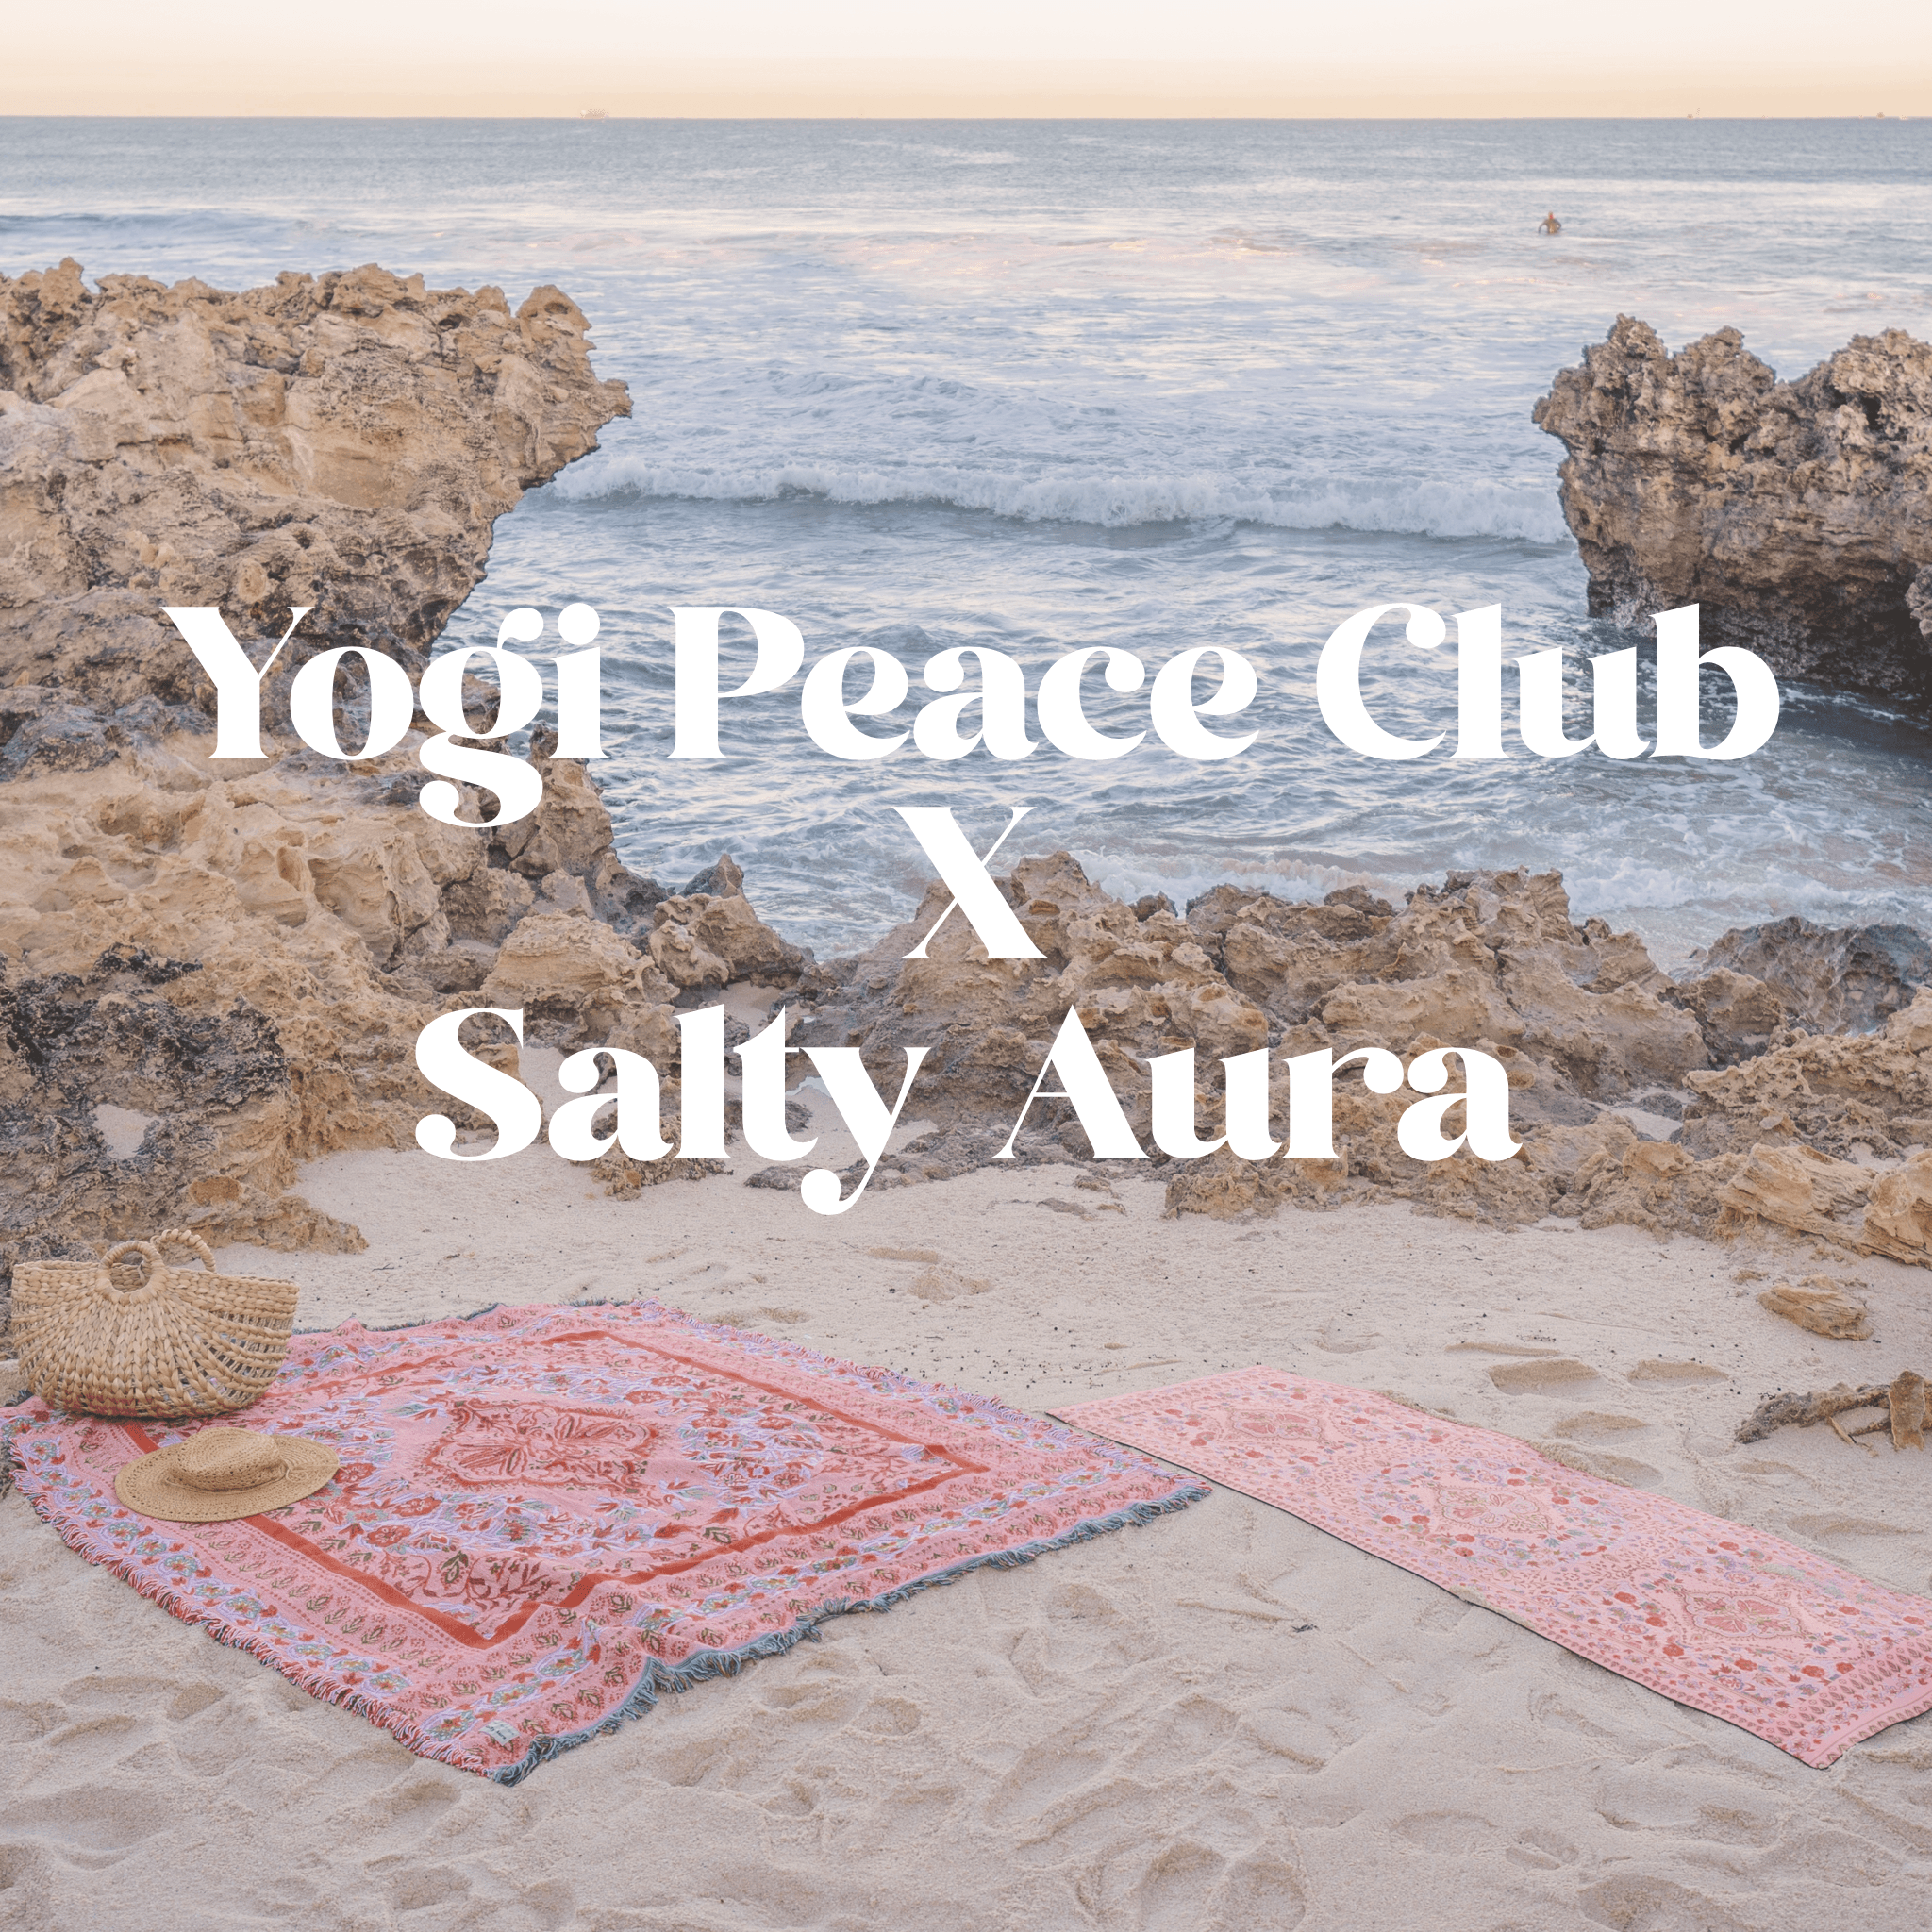 Yogi Peace Club X Salty Aura: Behind The Collaboration - Yogi Peace Club